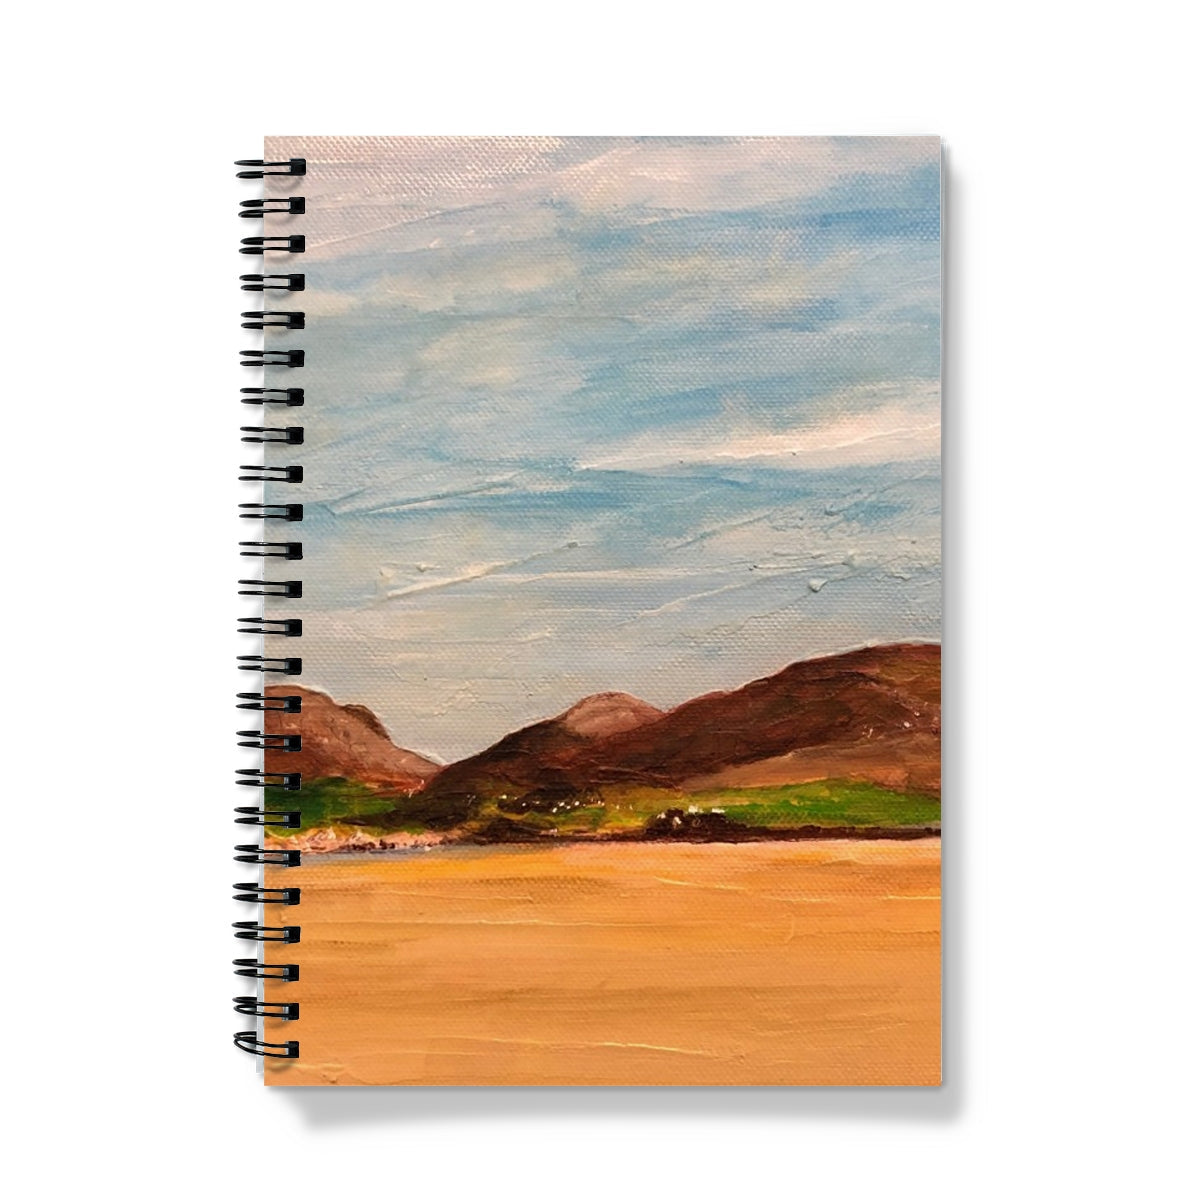 Uig Sands Lewis Art Gifts Notebook-Journals & Notebooks-Hebridean Islands Art Gallery-A5-Graph-Paintings, Prints, Homeware, Art Gifts From Scotland By Scottish Artist Kevin Hunter